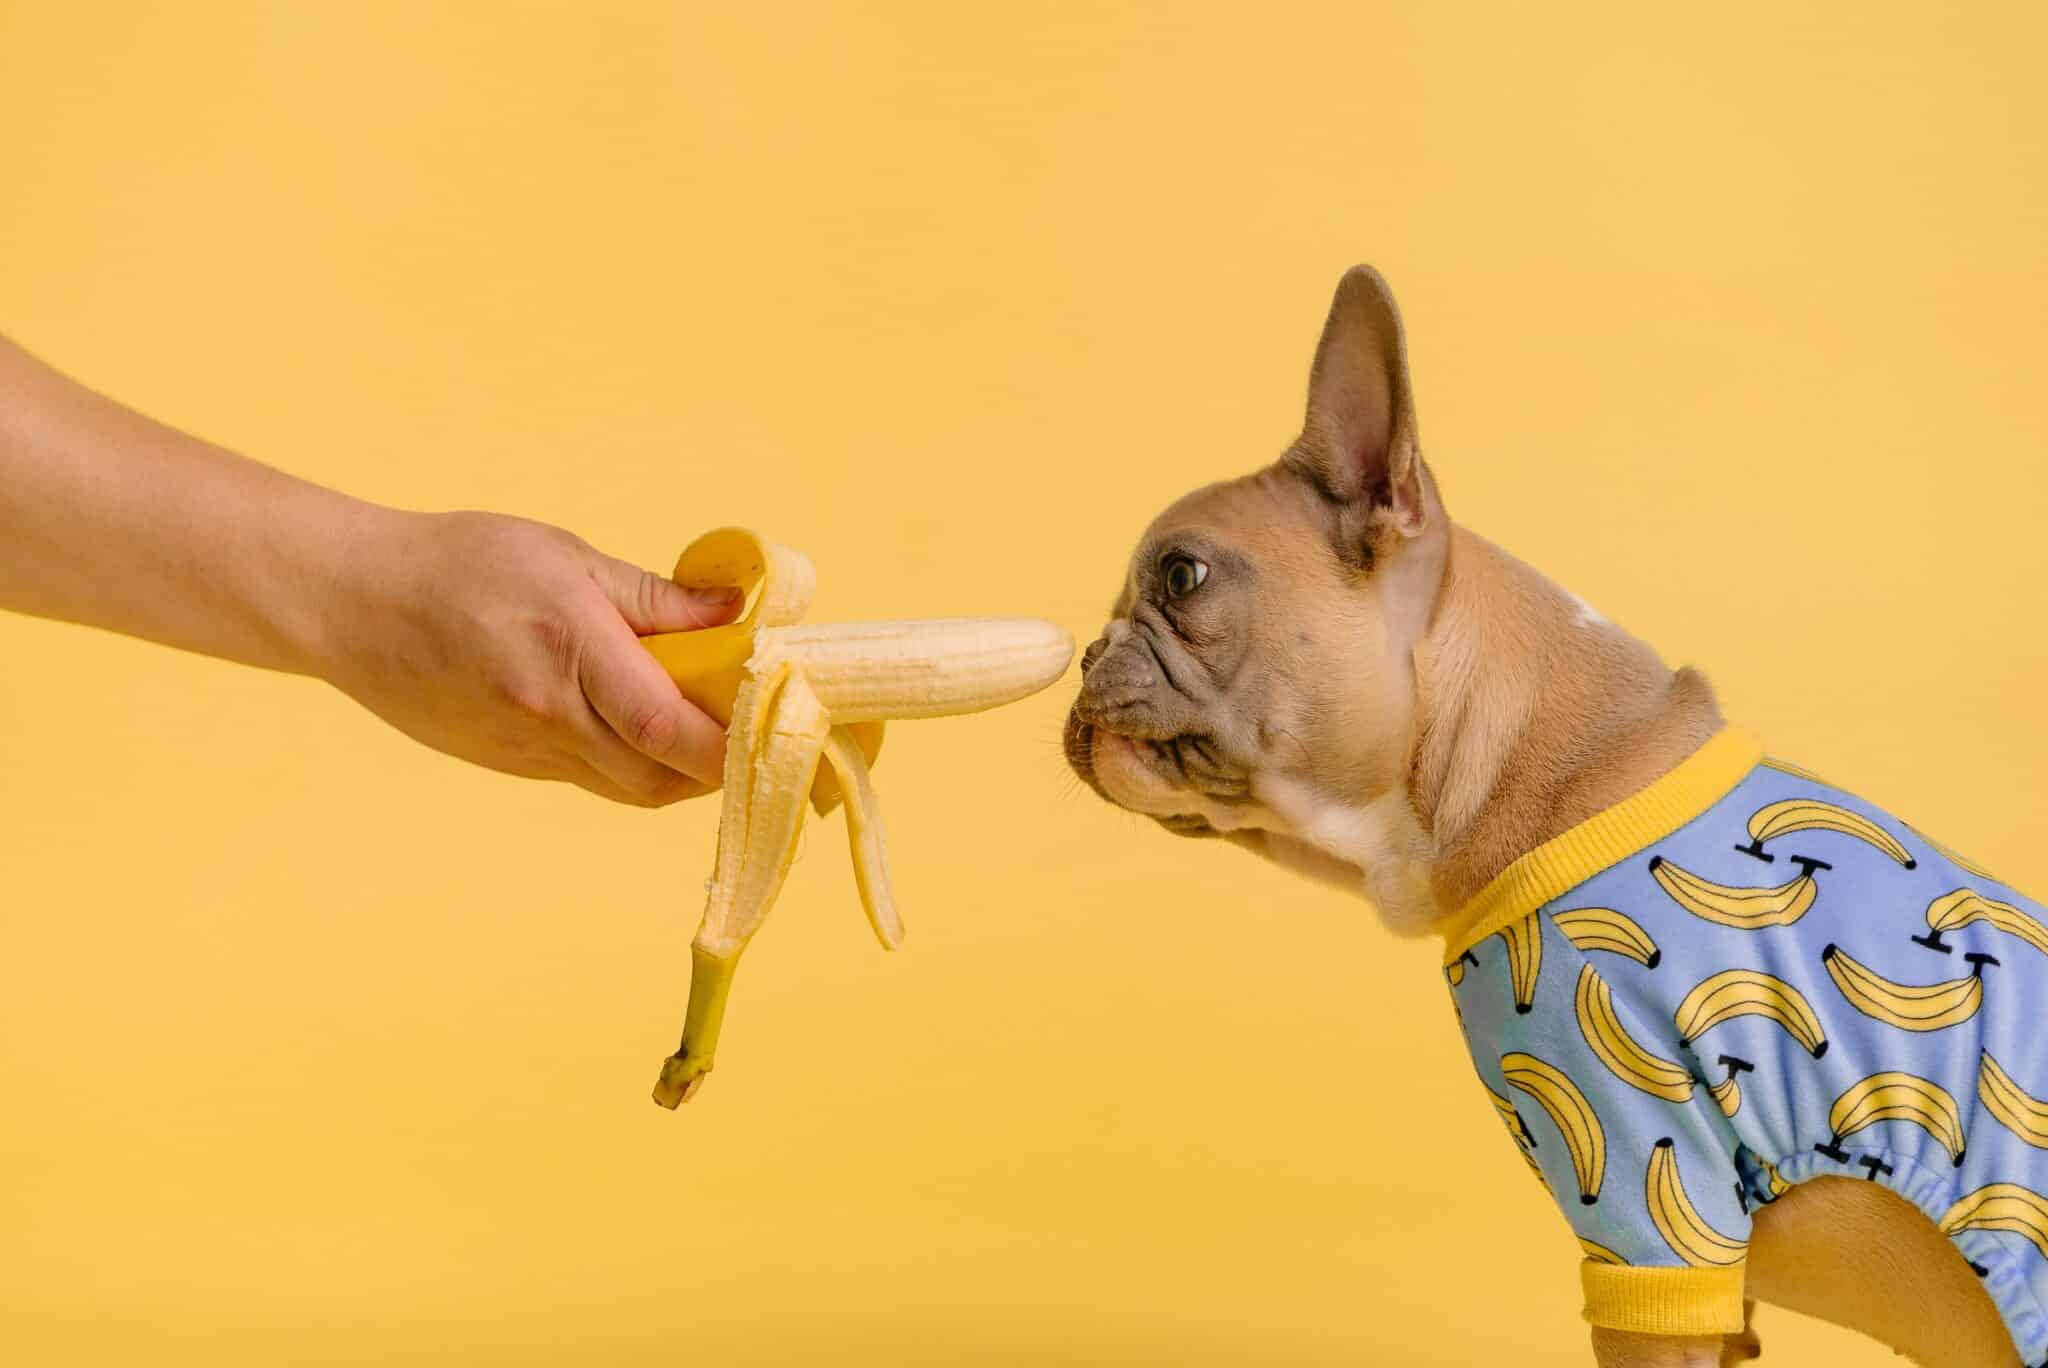 A French bulldog sniffing a banana